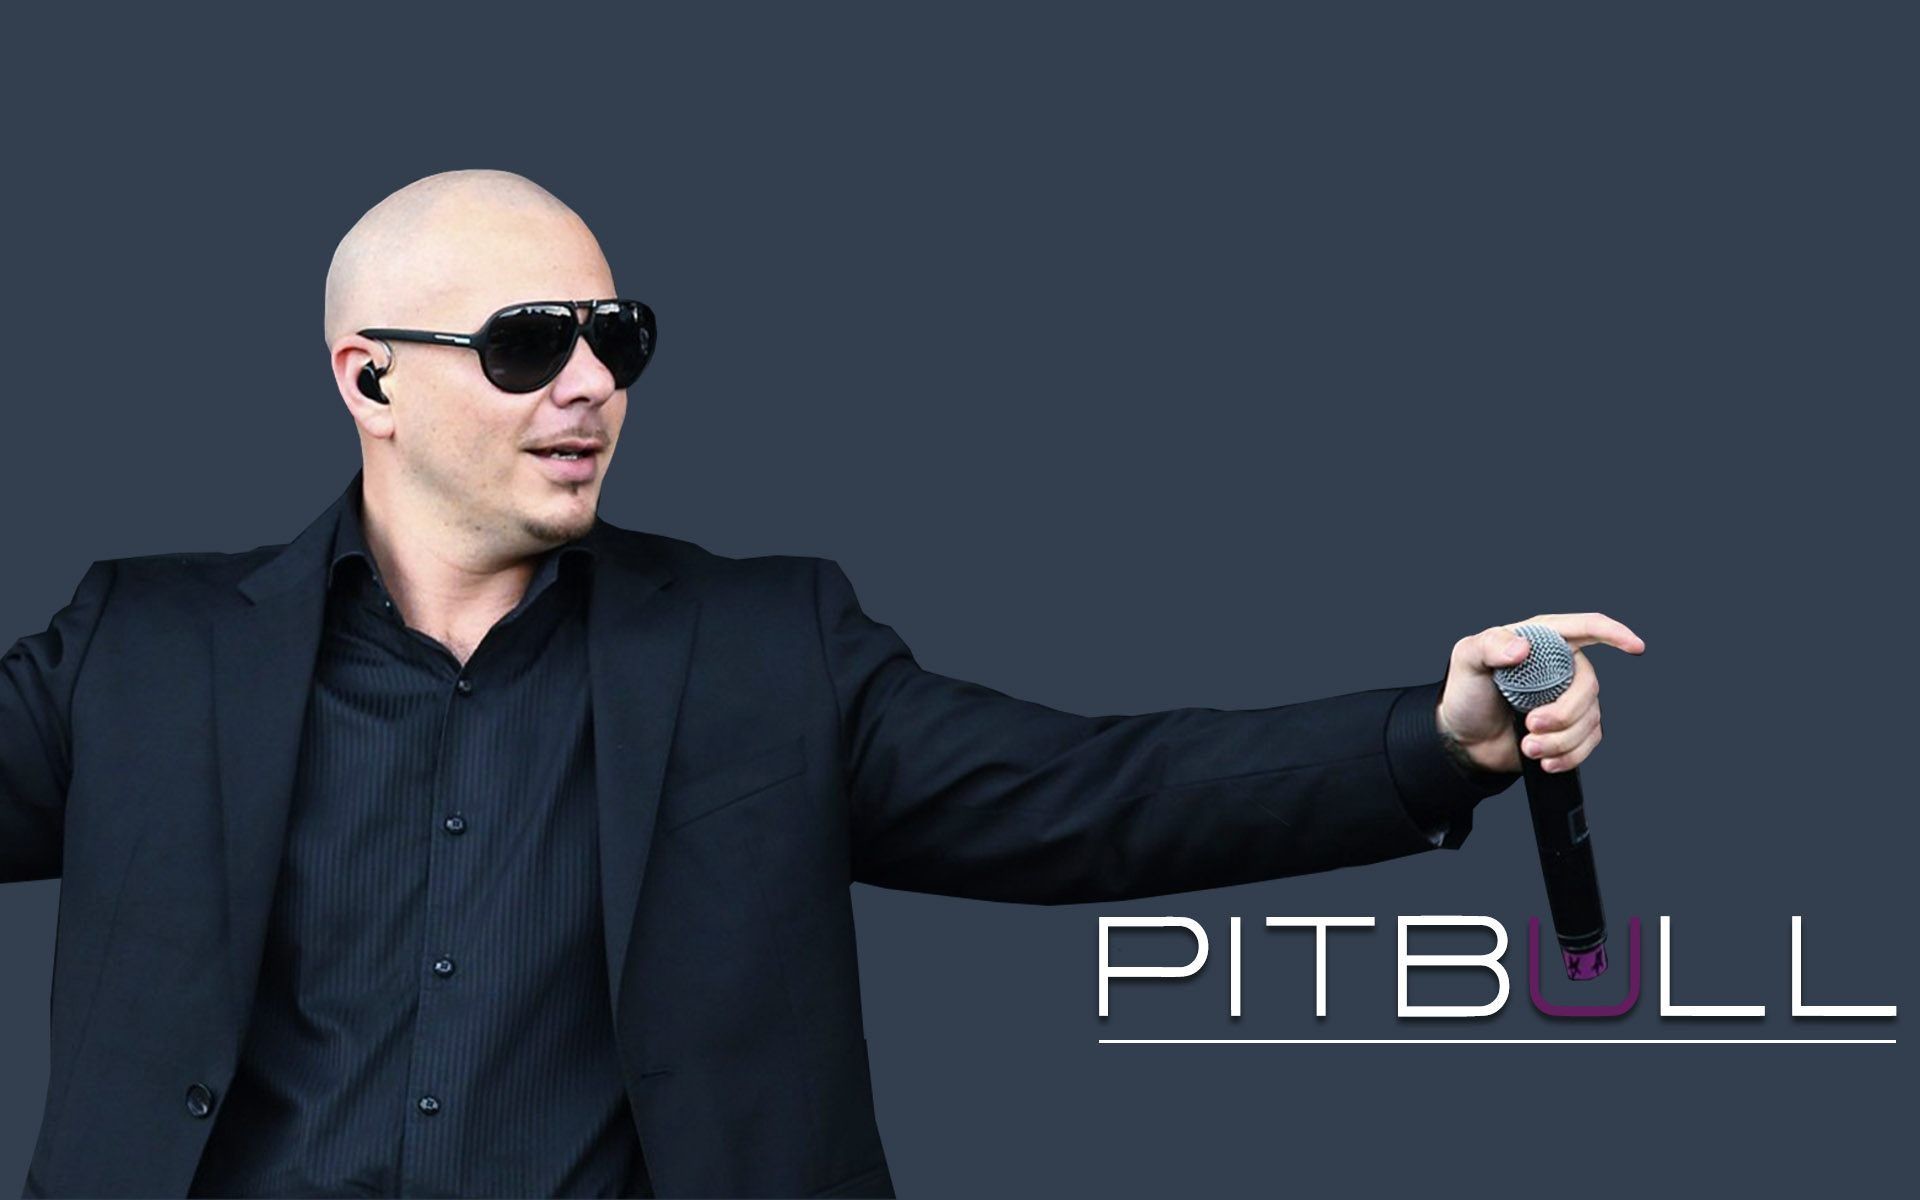 Pitbull HD Images 5 | Pitbull HD Images | Pinterest | Hd images and Pitbull